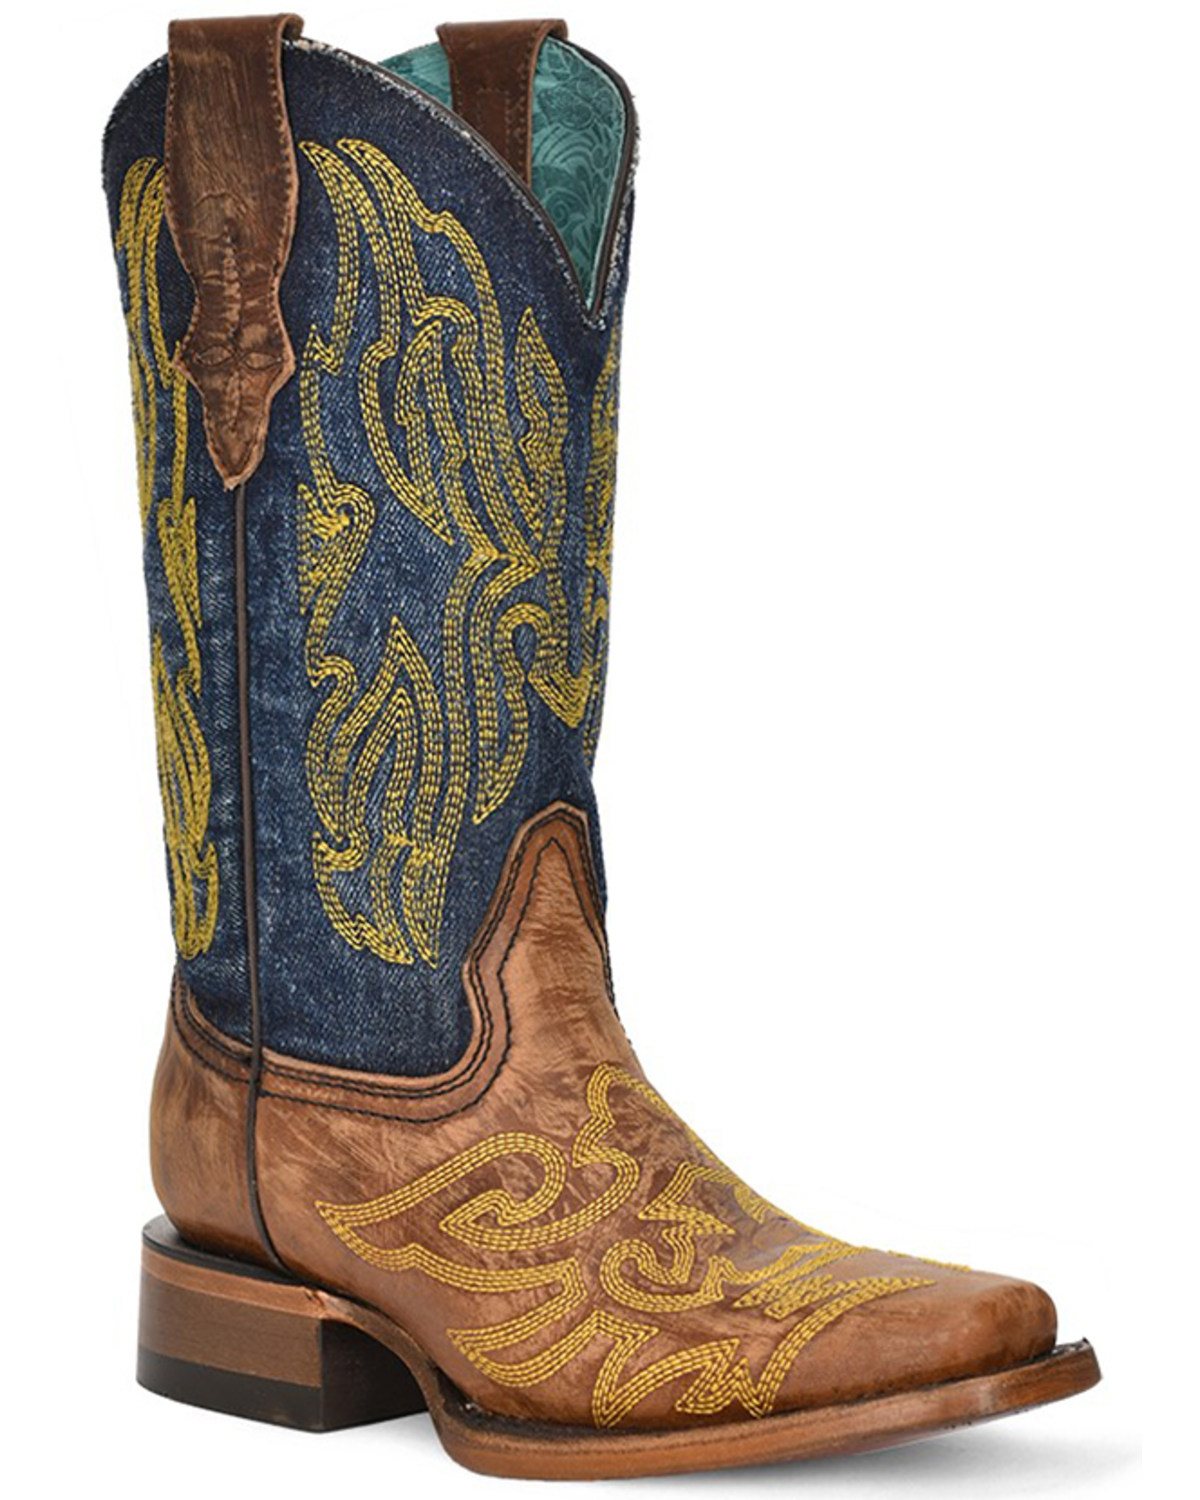 Corral Women's Denim Western Boots - Square Toe